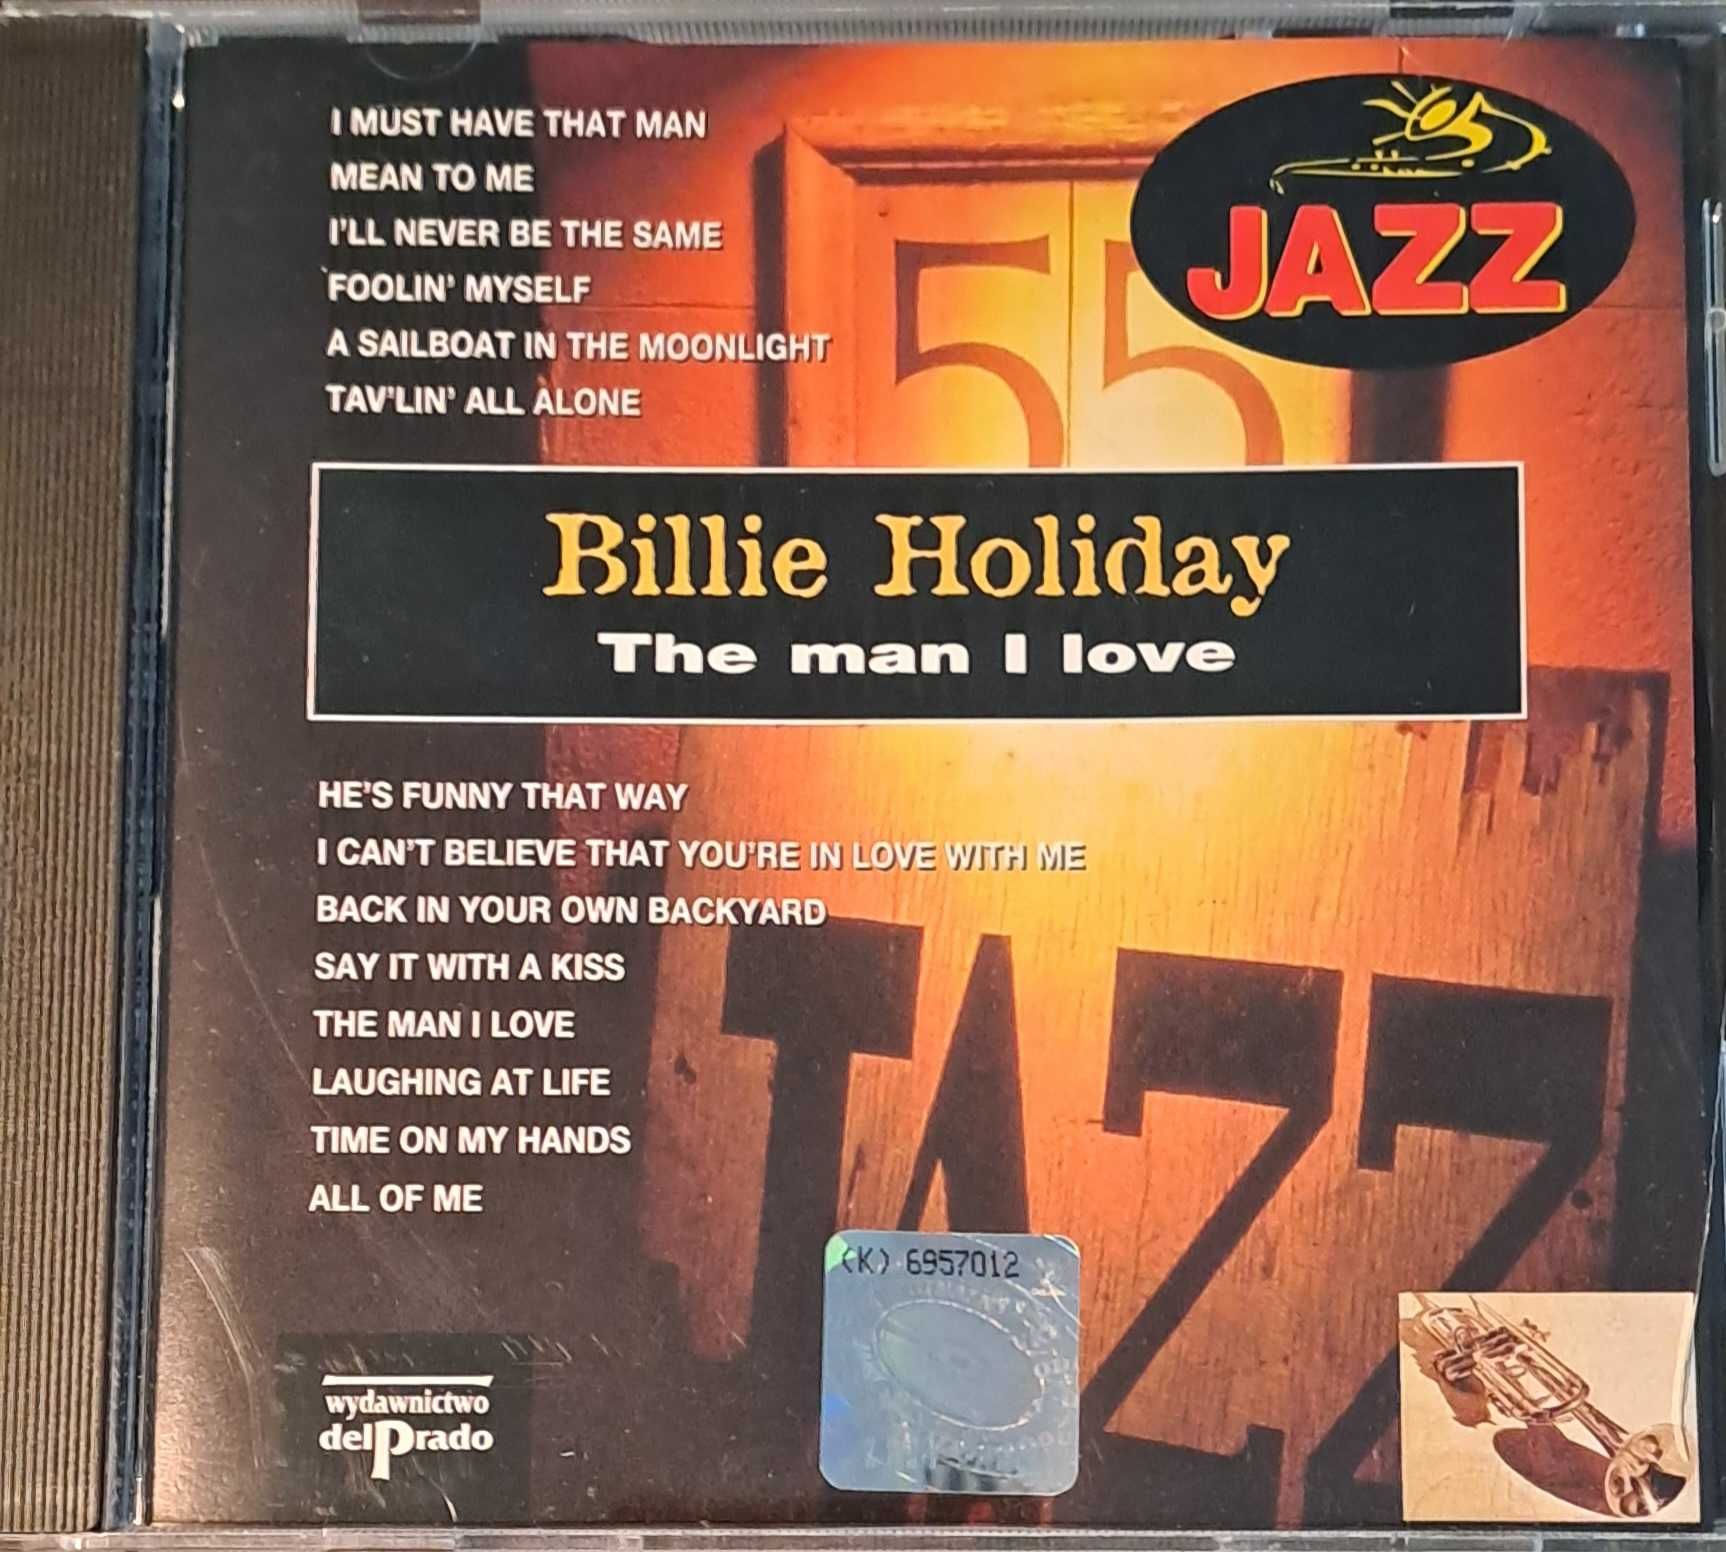 Billie Holiday - "The man i love"